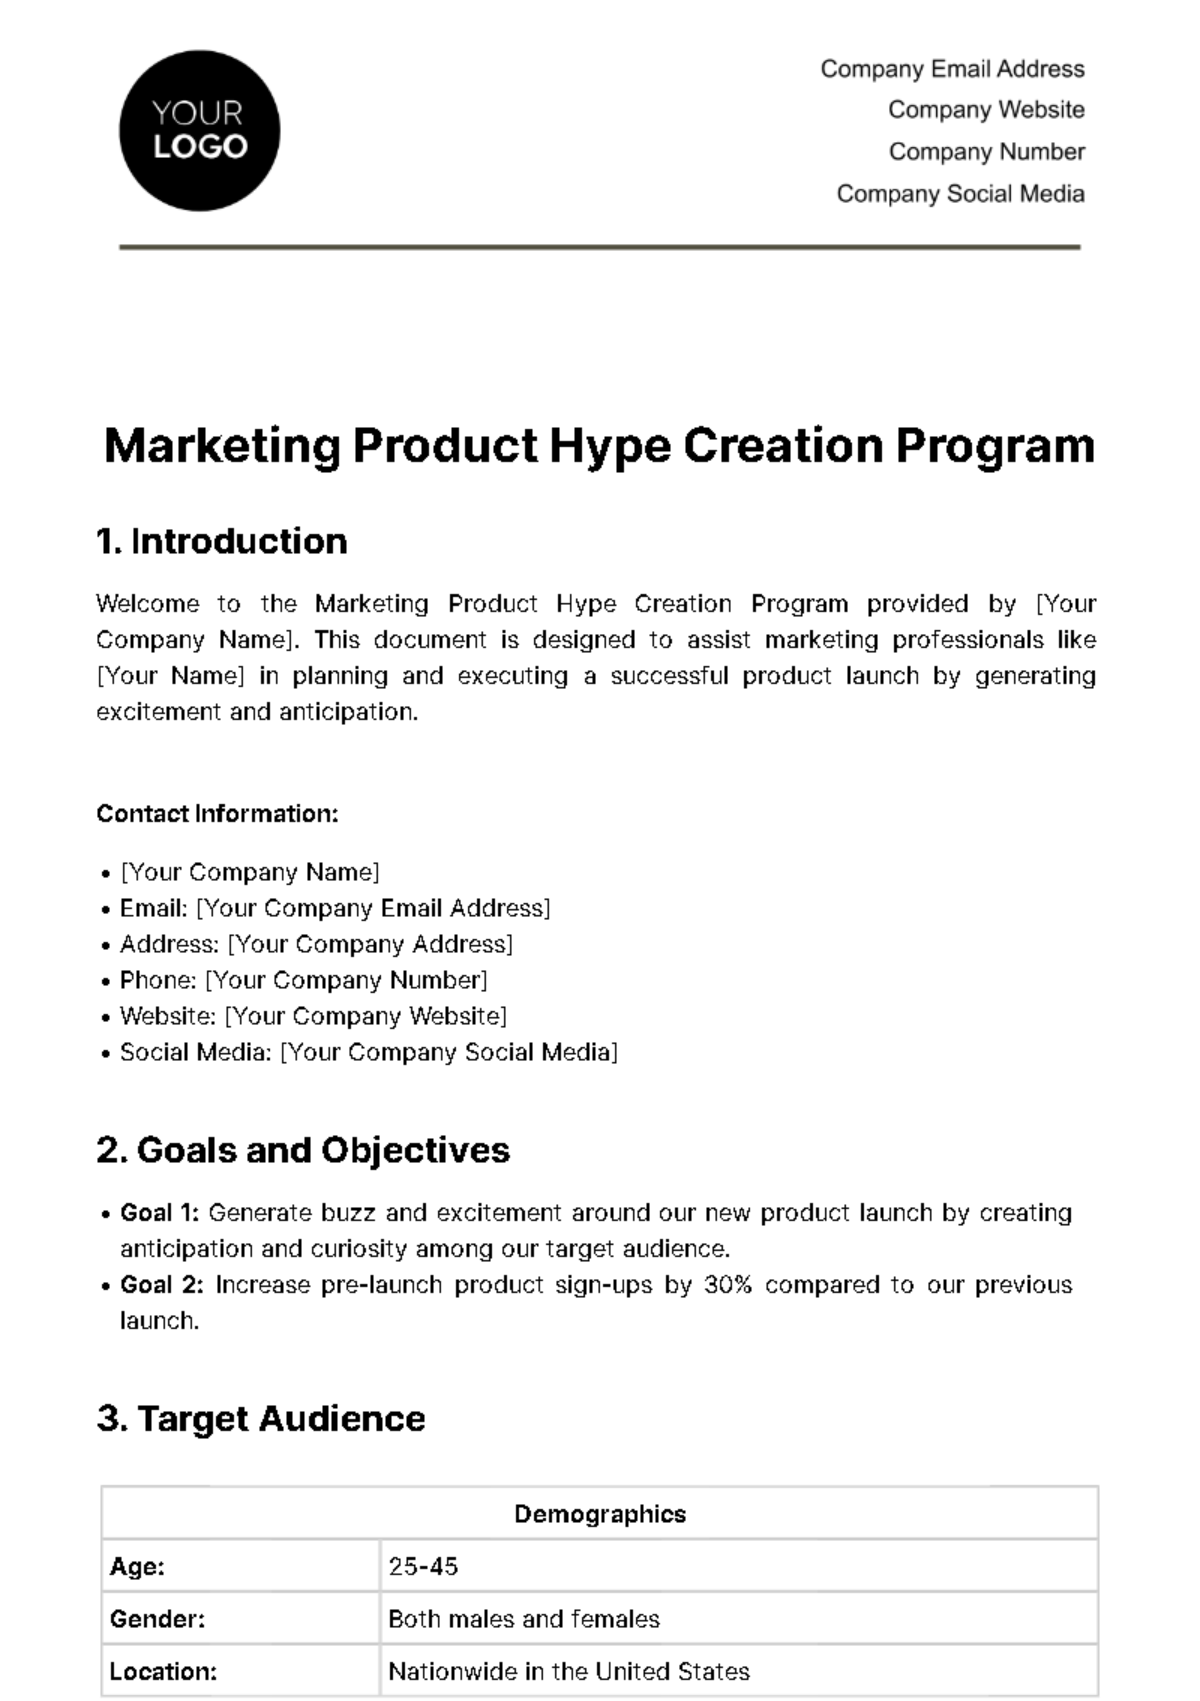 Marketing Product Hype Creation Program Template